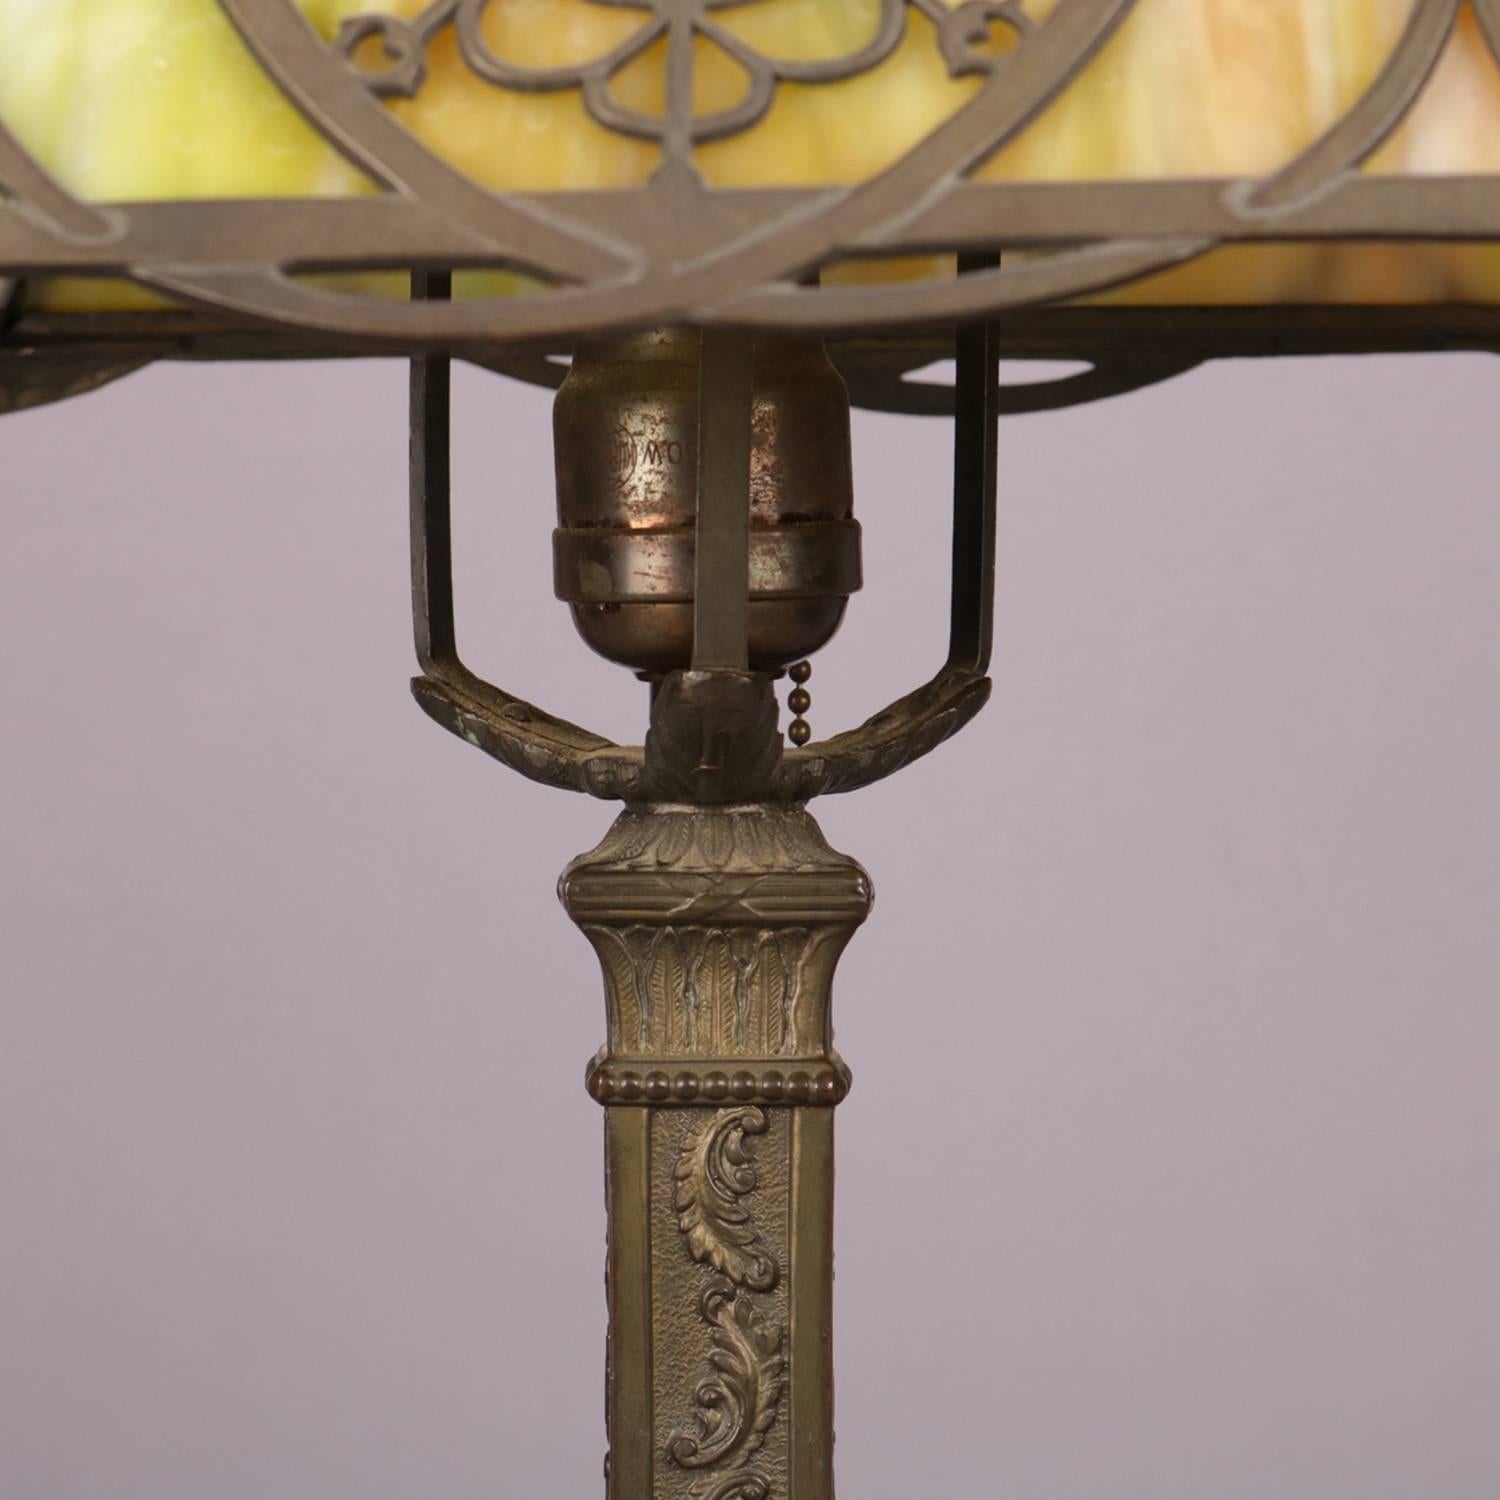 Metal Antique Arts & Crafts Bradley & Hubbard School Slag Glass Table Lamp, circa 1920